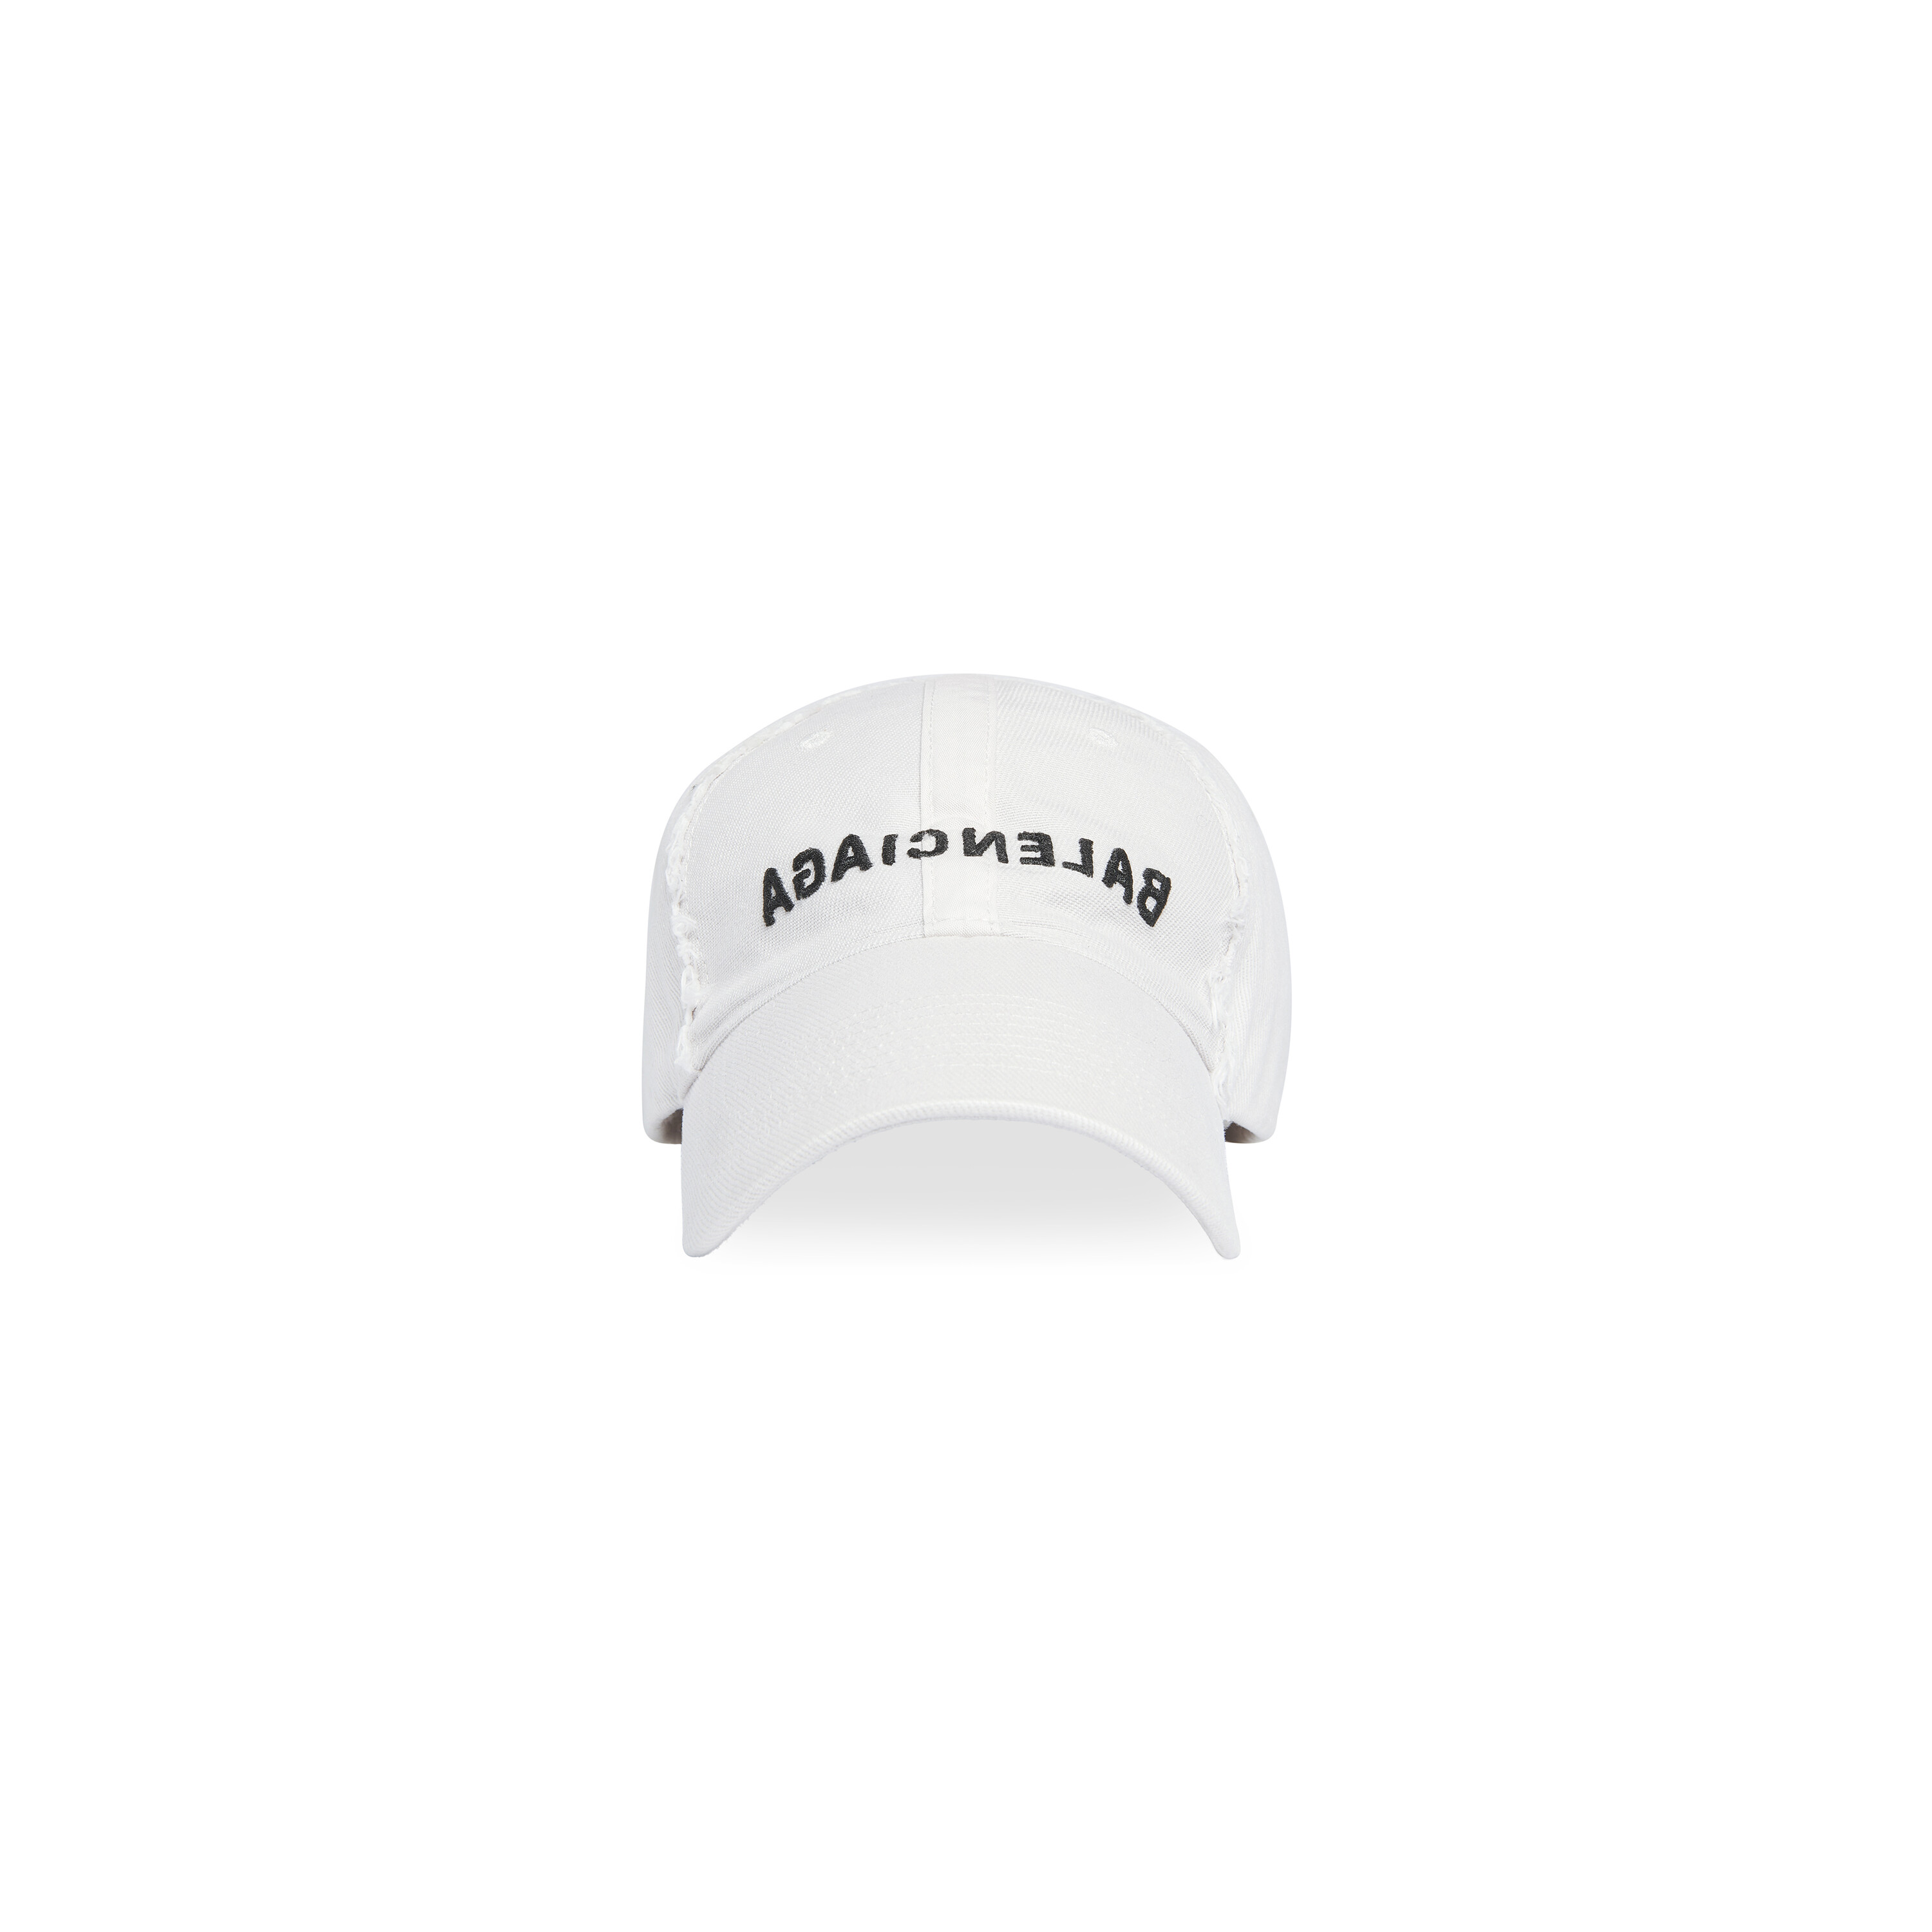 BALENCIAGA baseball cap with Political Destr logo  Black  Balenciaga hat  661884 310B2 online on GIGLIOCOM